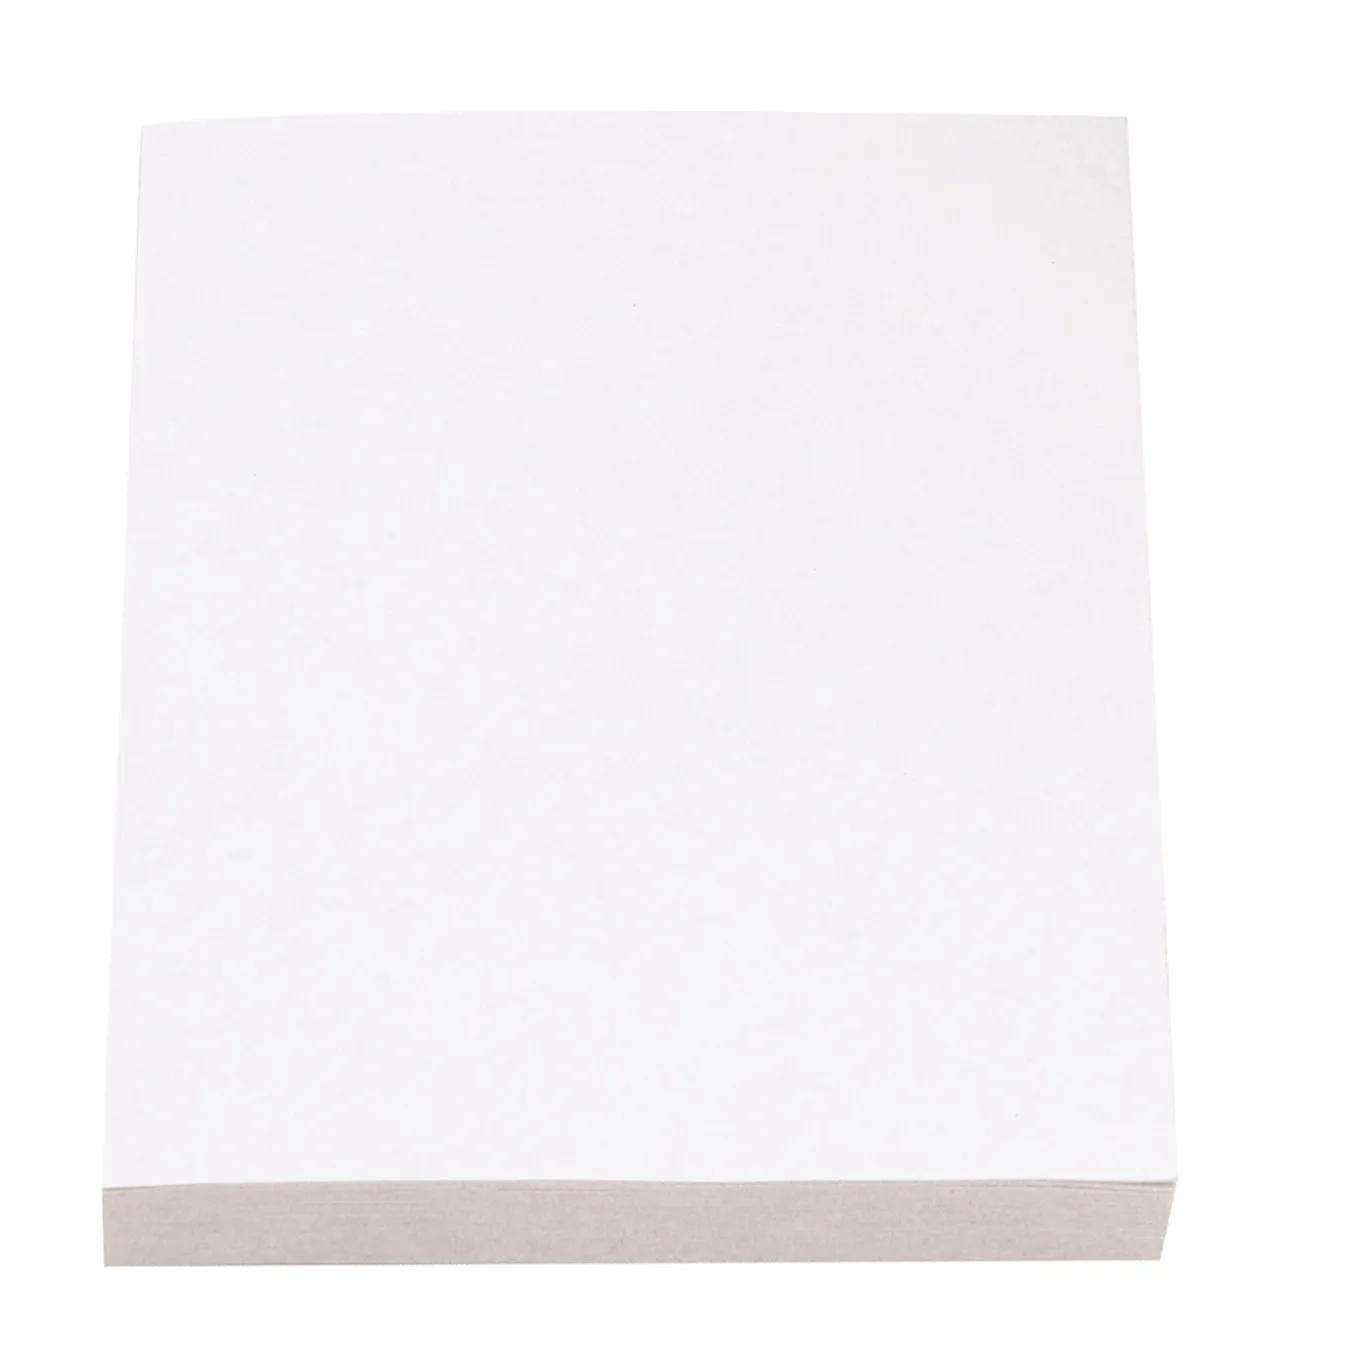 Souvenir® Sticky Note™ 2-3/4" x 3" pad, 25 sheet 2 of 10